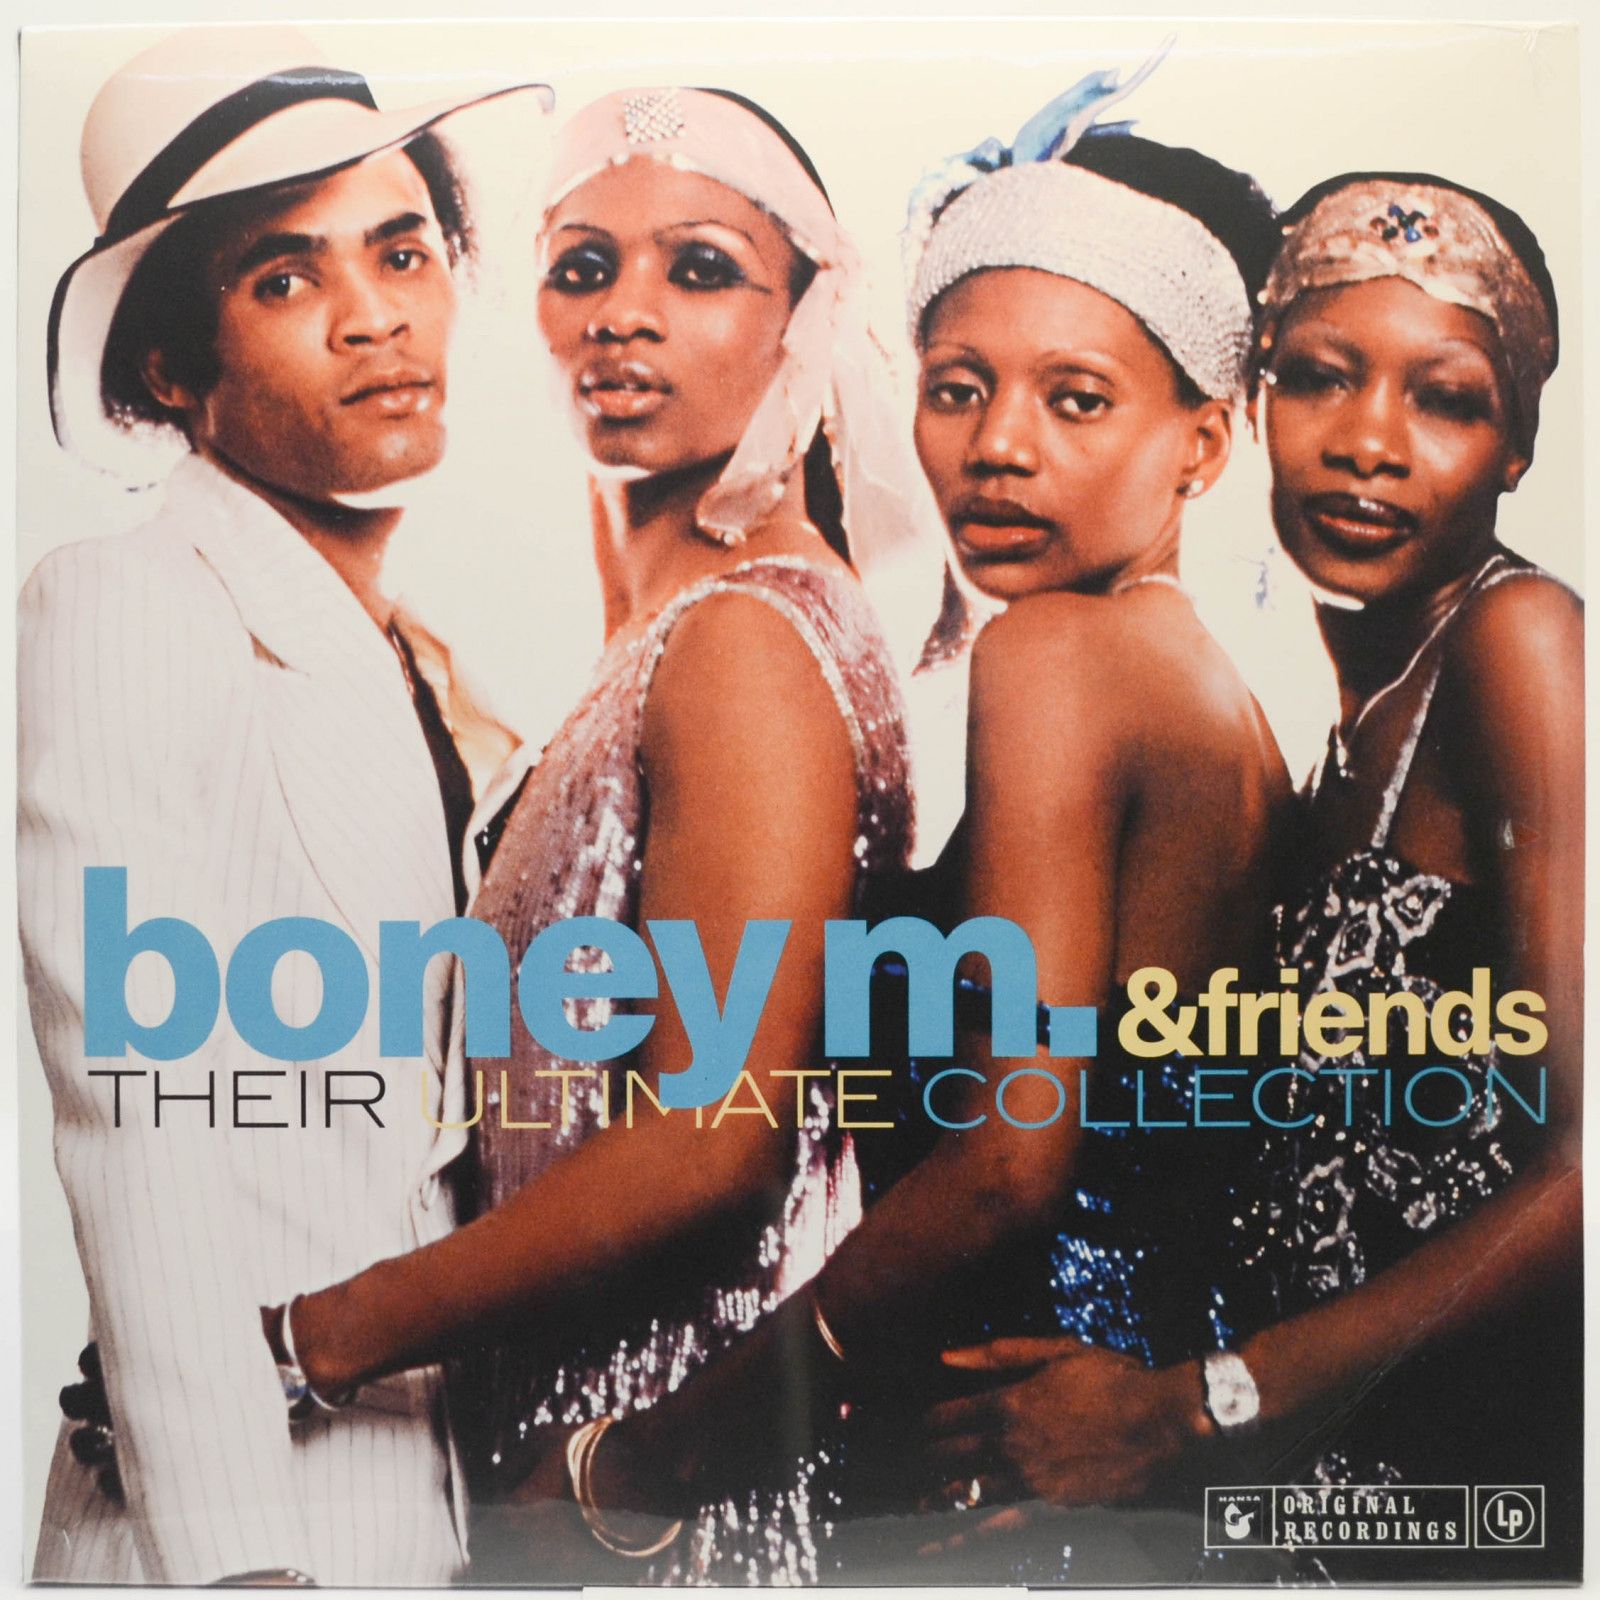 Boney M. — Boney M. & Friends - Their Ultimate Collection, 2017